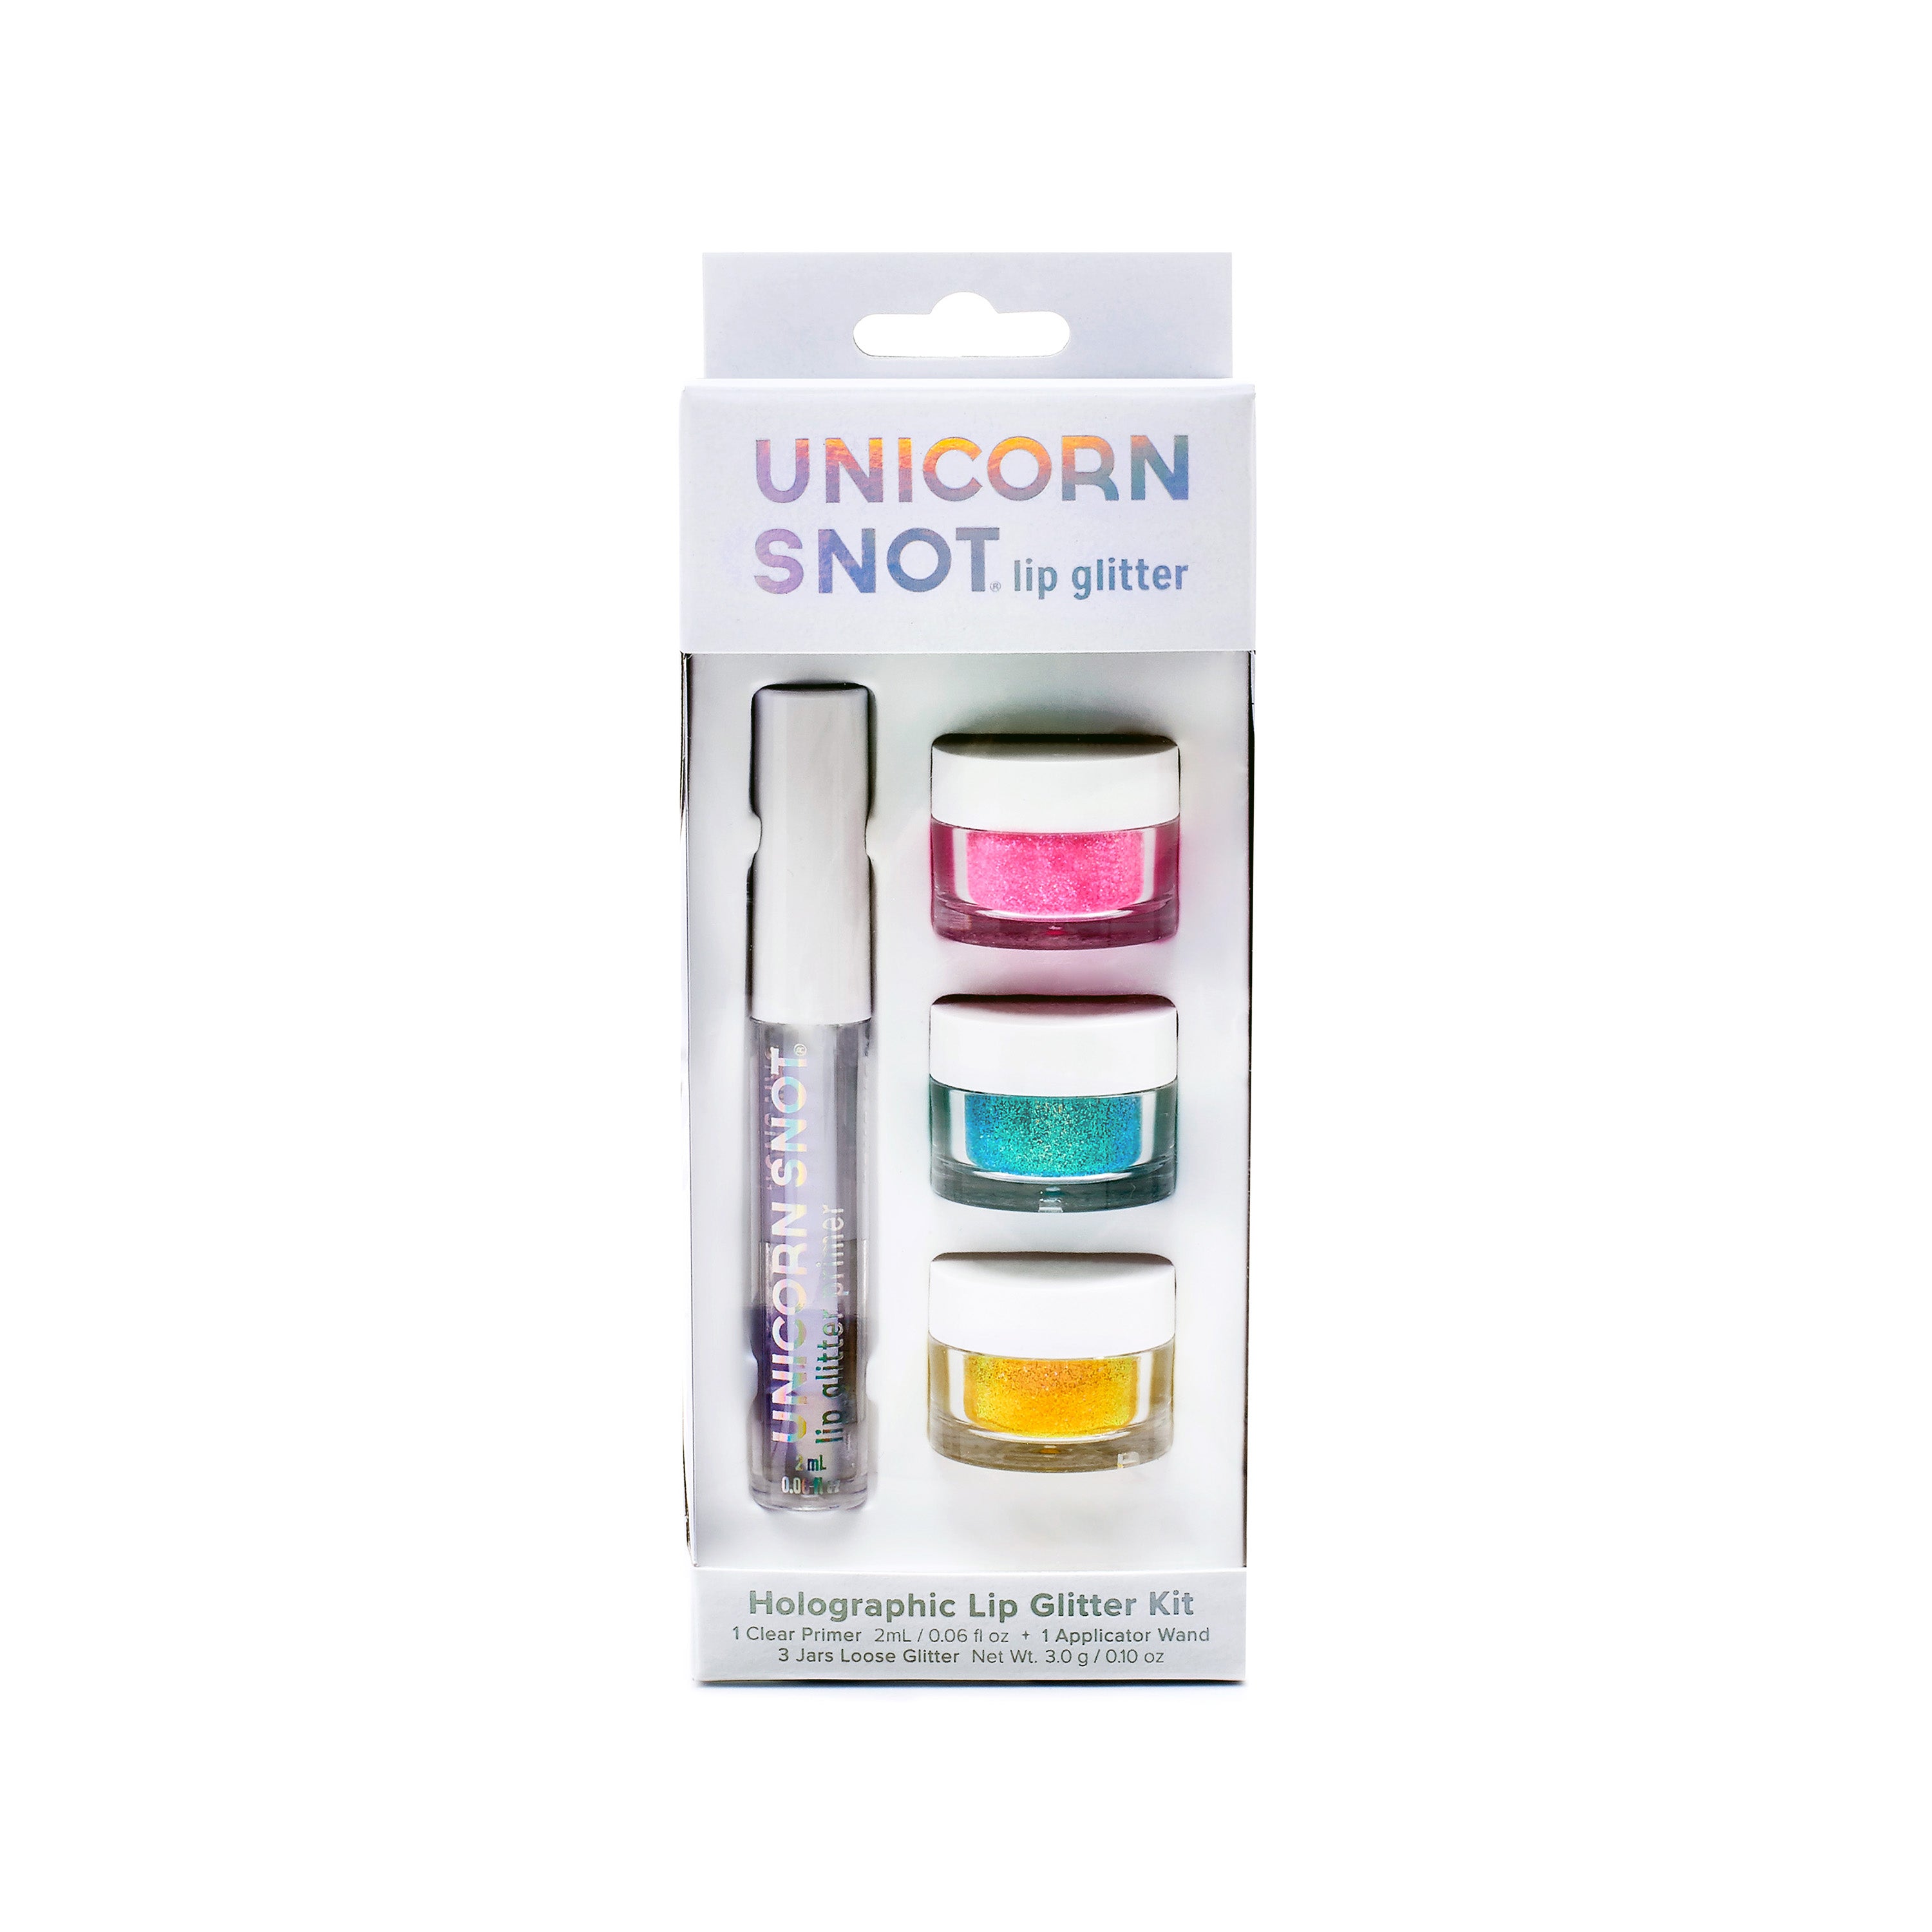 Unicorn Snot Glitter Lip Kit